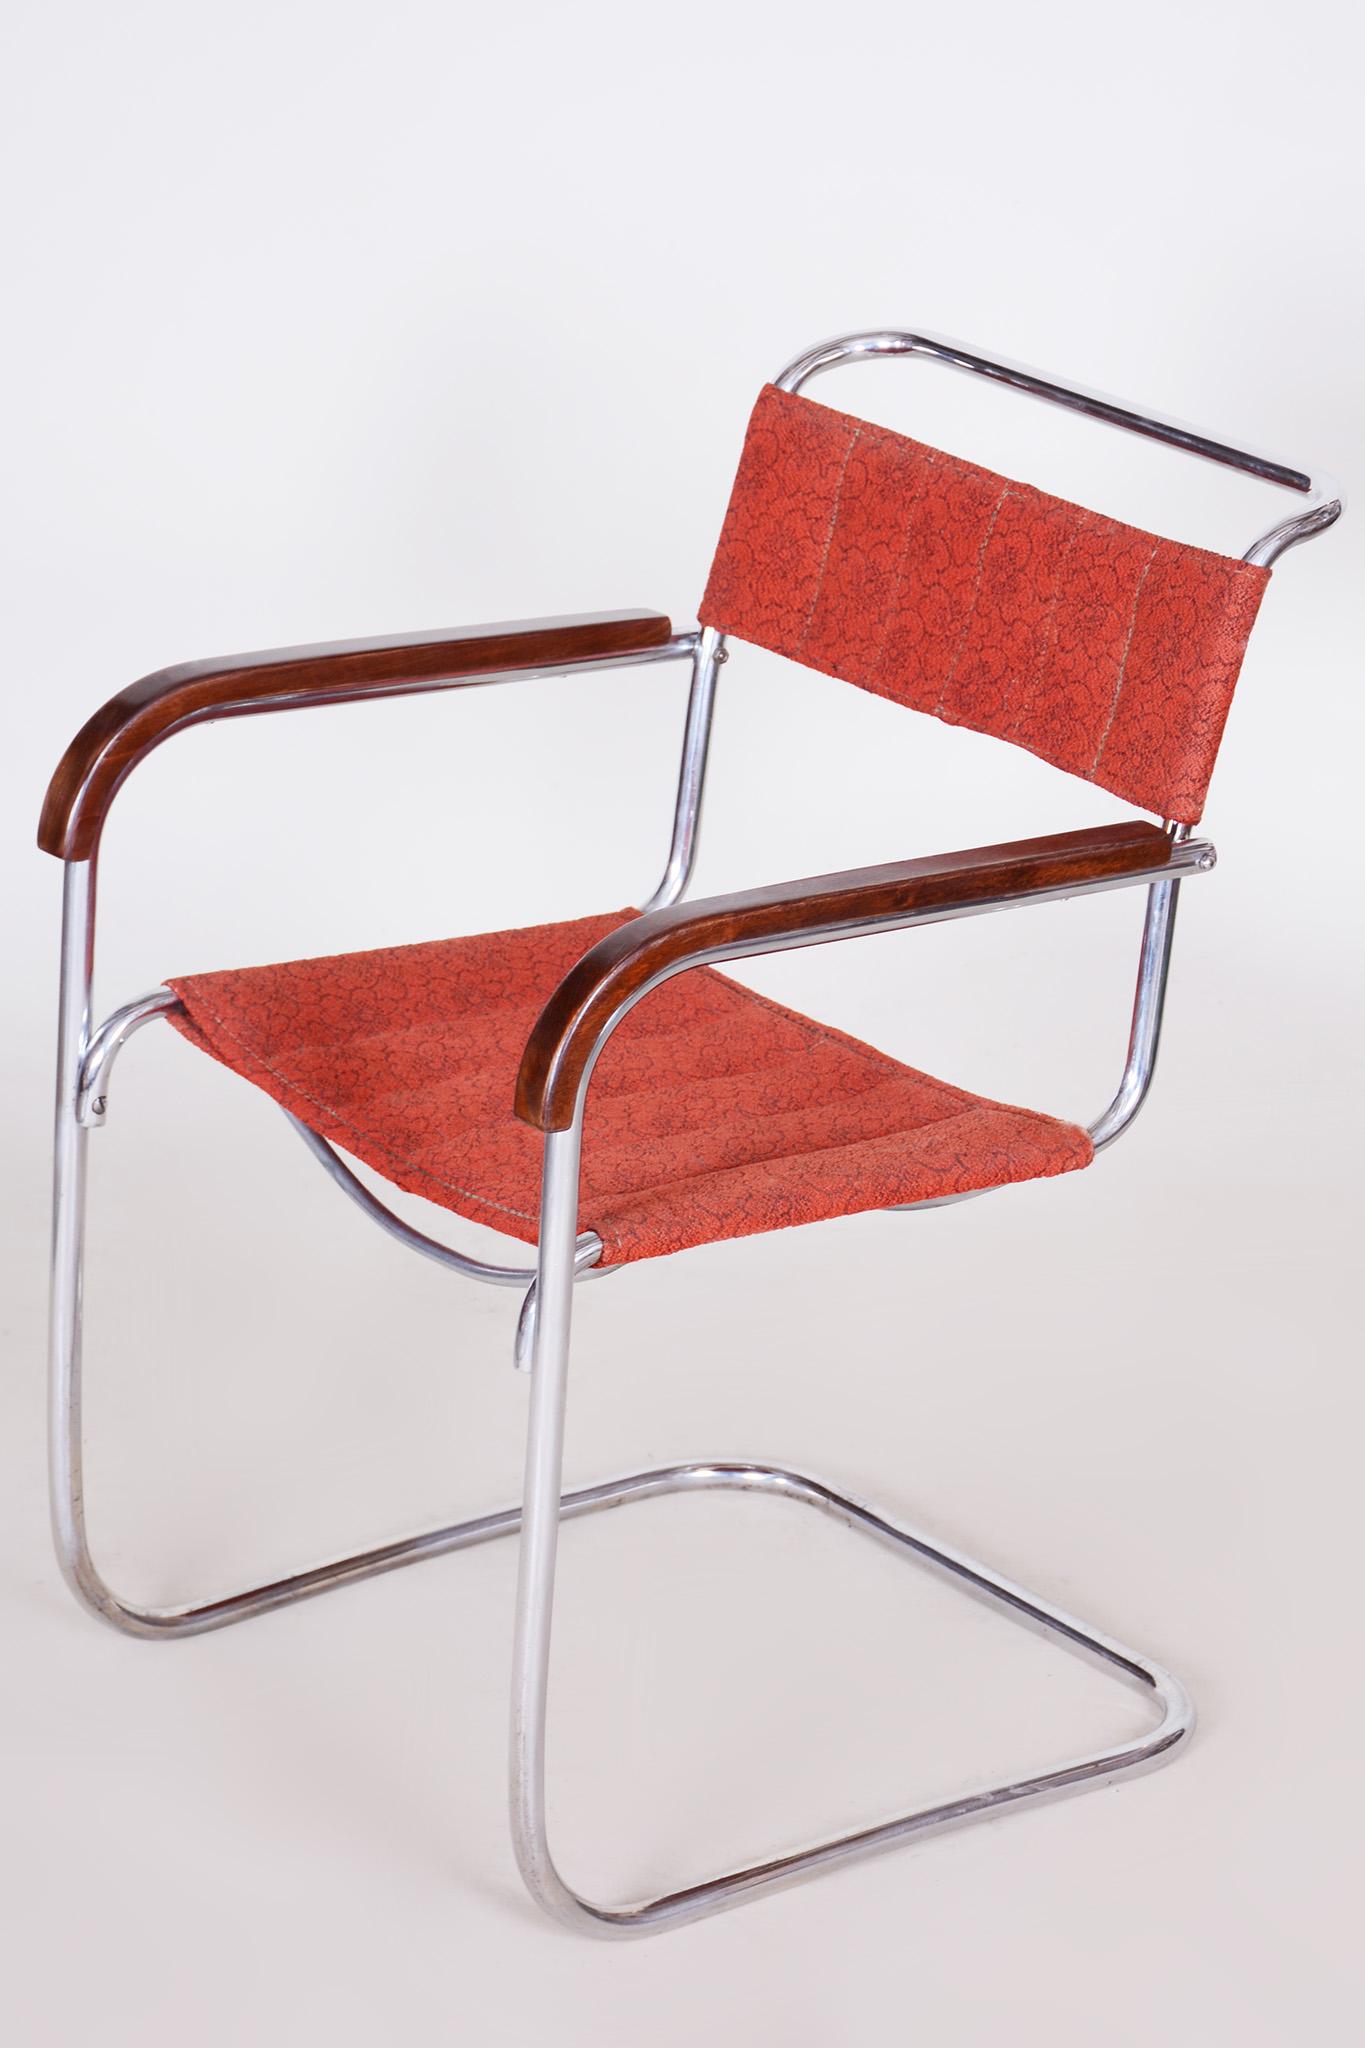 Red Bauhaus Armchair by Marcel Breuer, Mücke, Melder, Beech, Chrome, 1930s For Sale 2